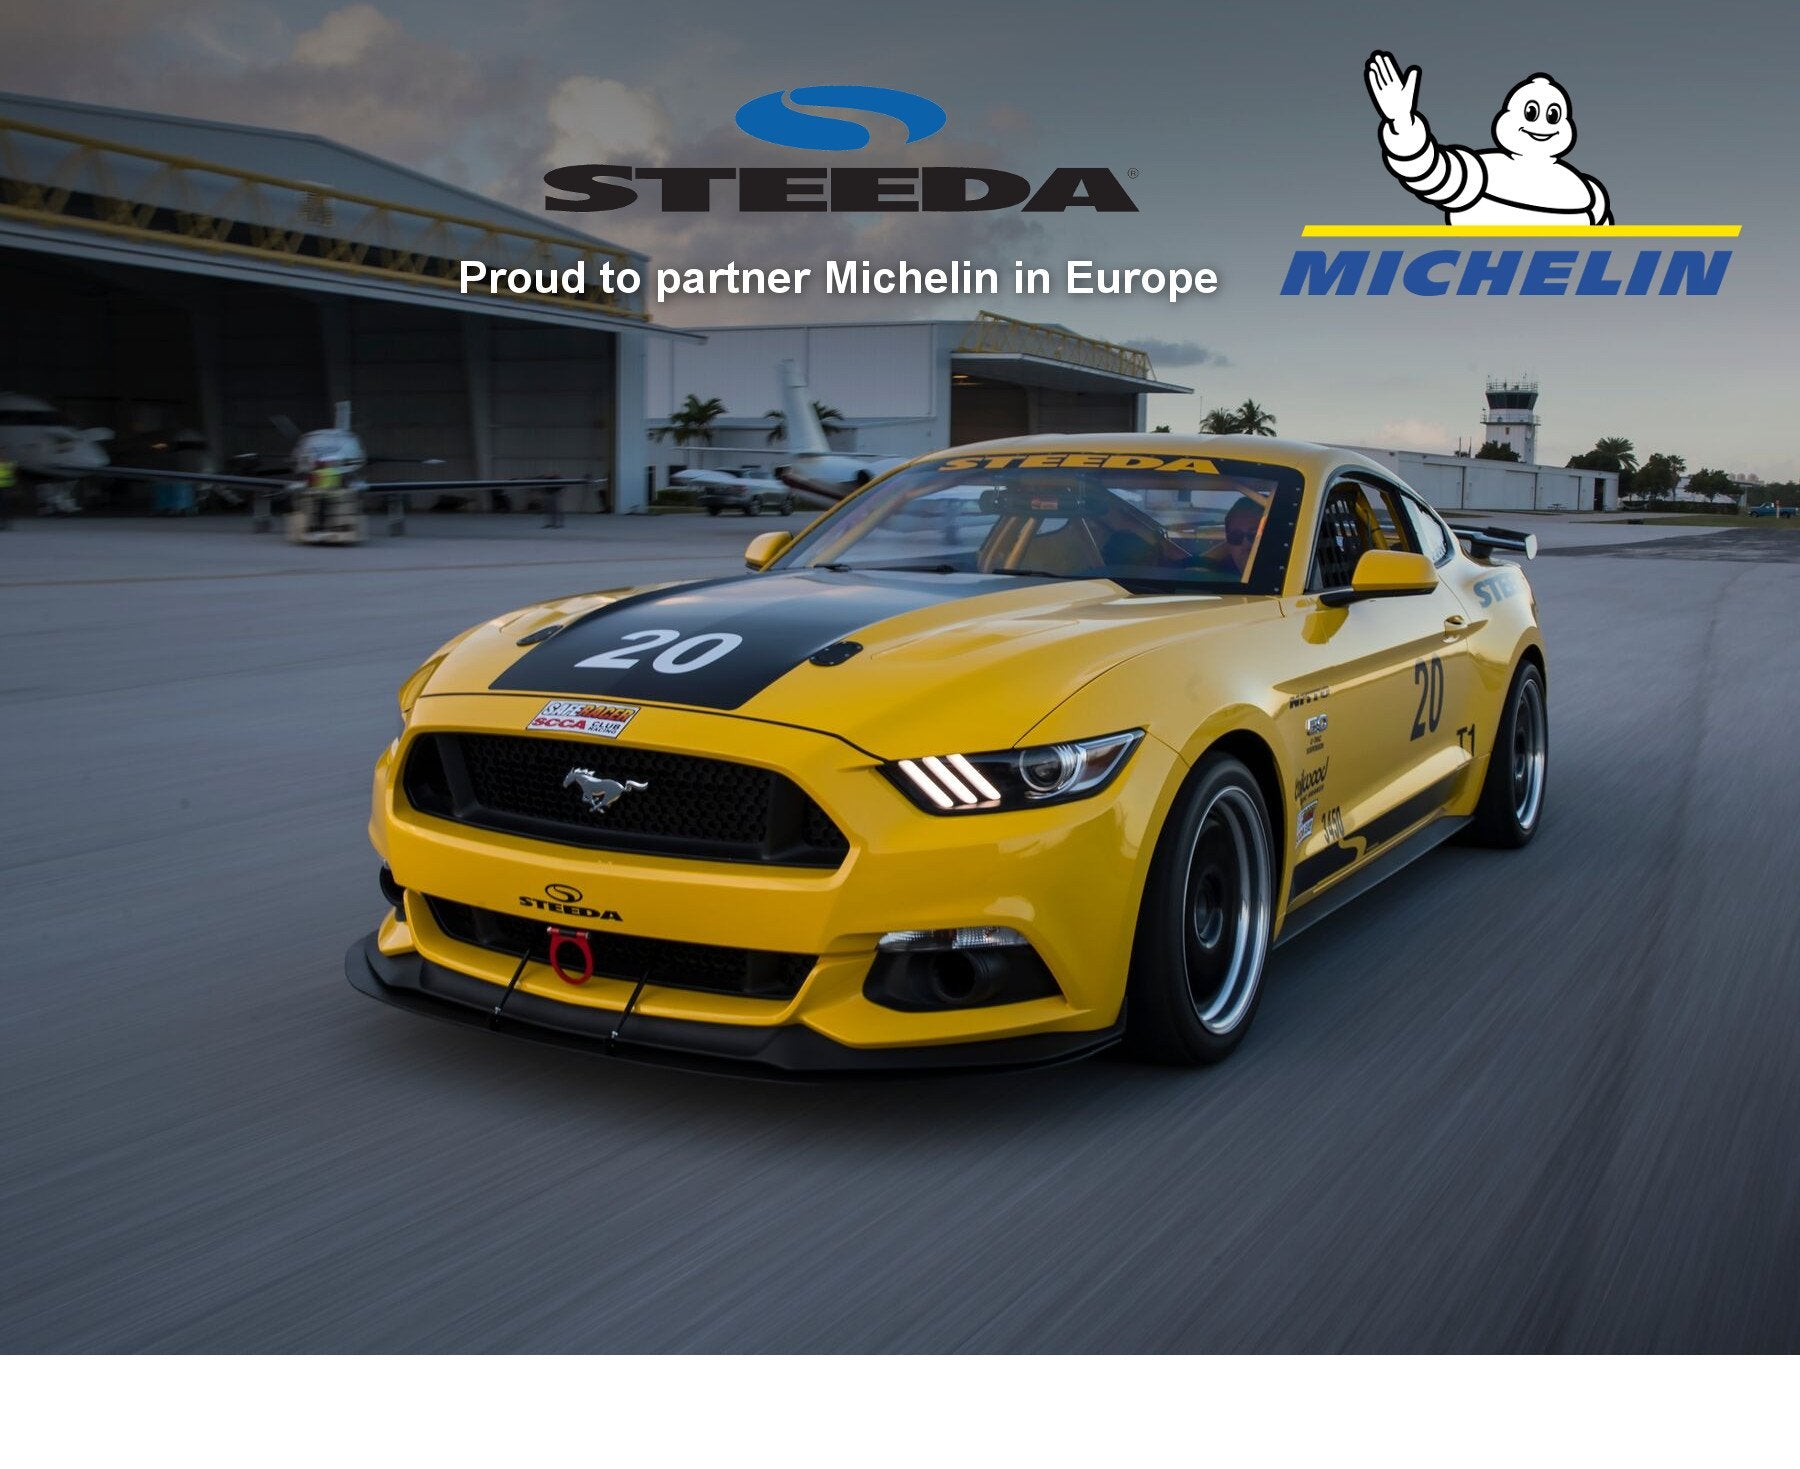 Steeda Europe Announce Partnership with Michelin